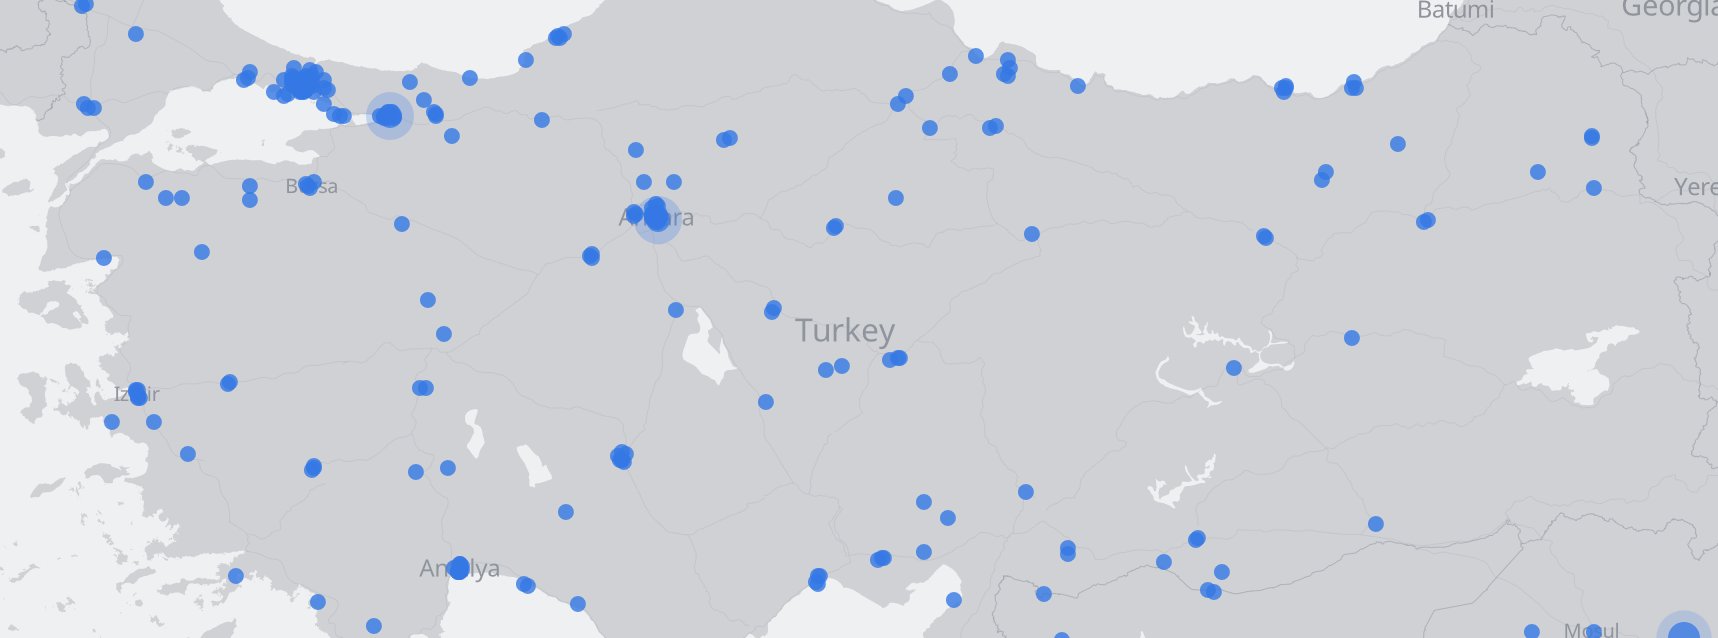 Facebook Live video streams around Turkey.